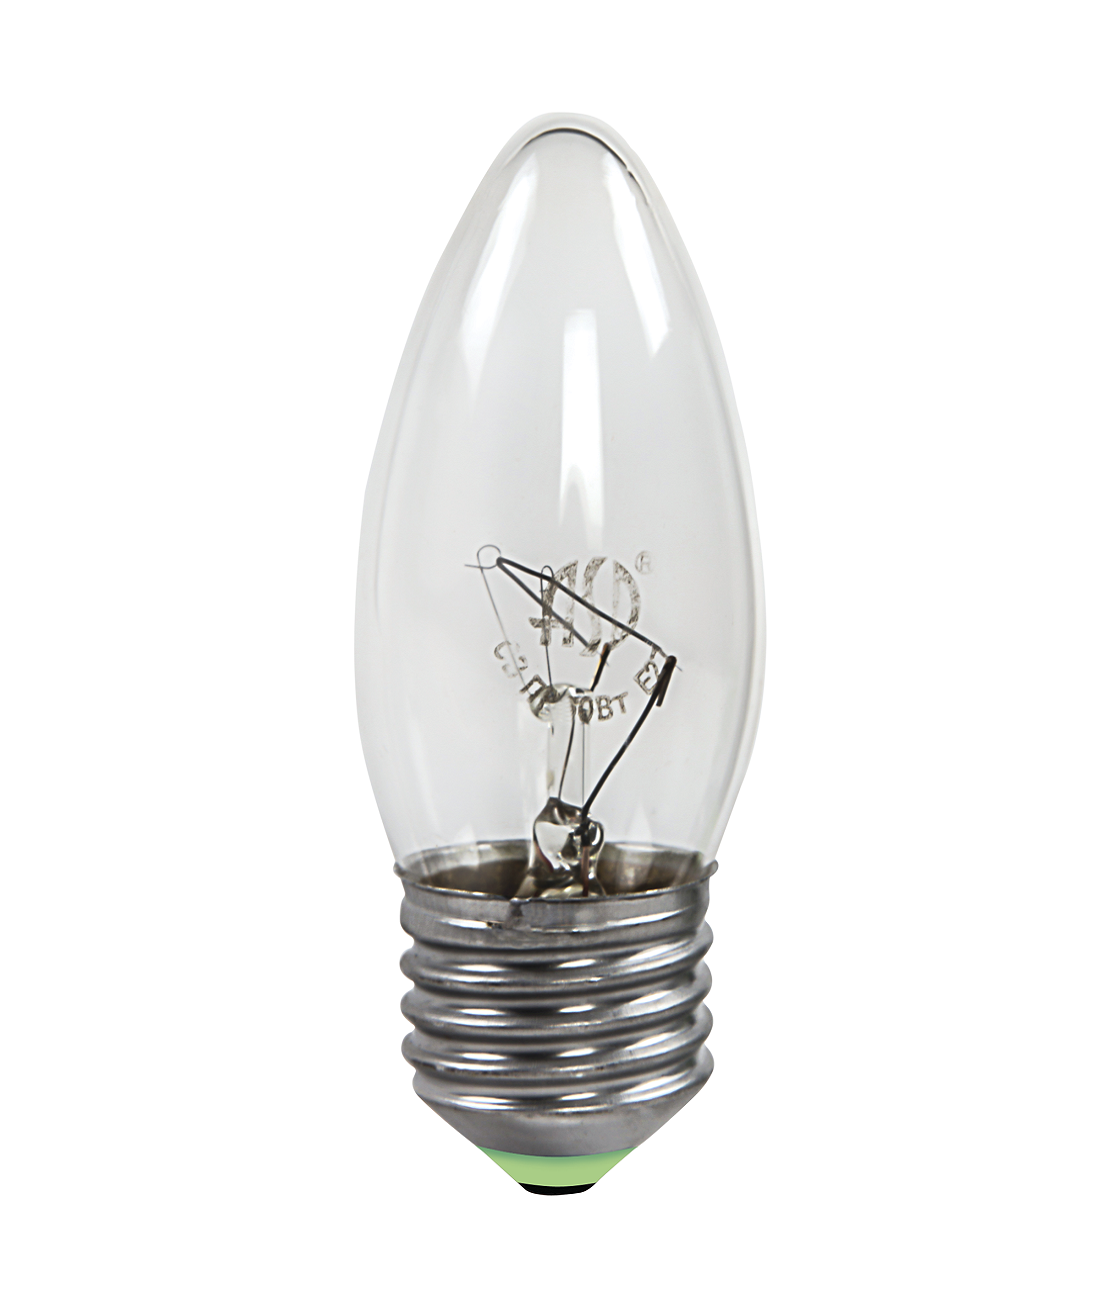 Купить лампа накаливания свеча b35 40вт 230в е27 прозрачная 380лм asd, 100% качество, в наличии на L-ed.ru